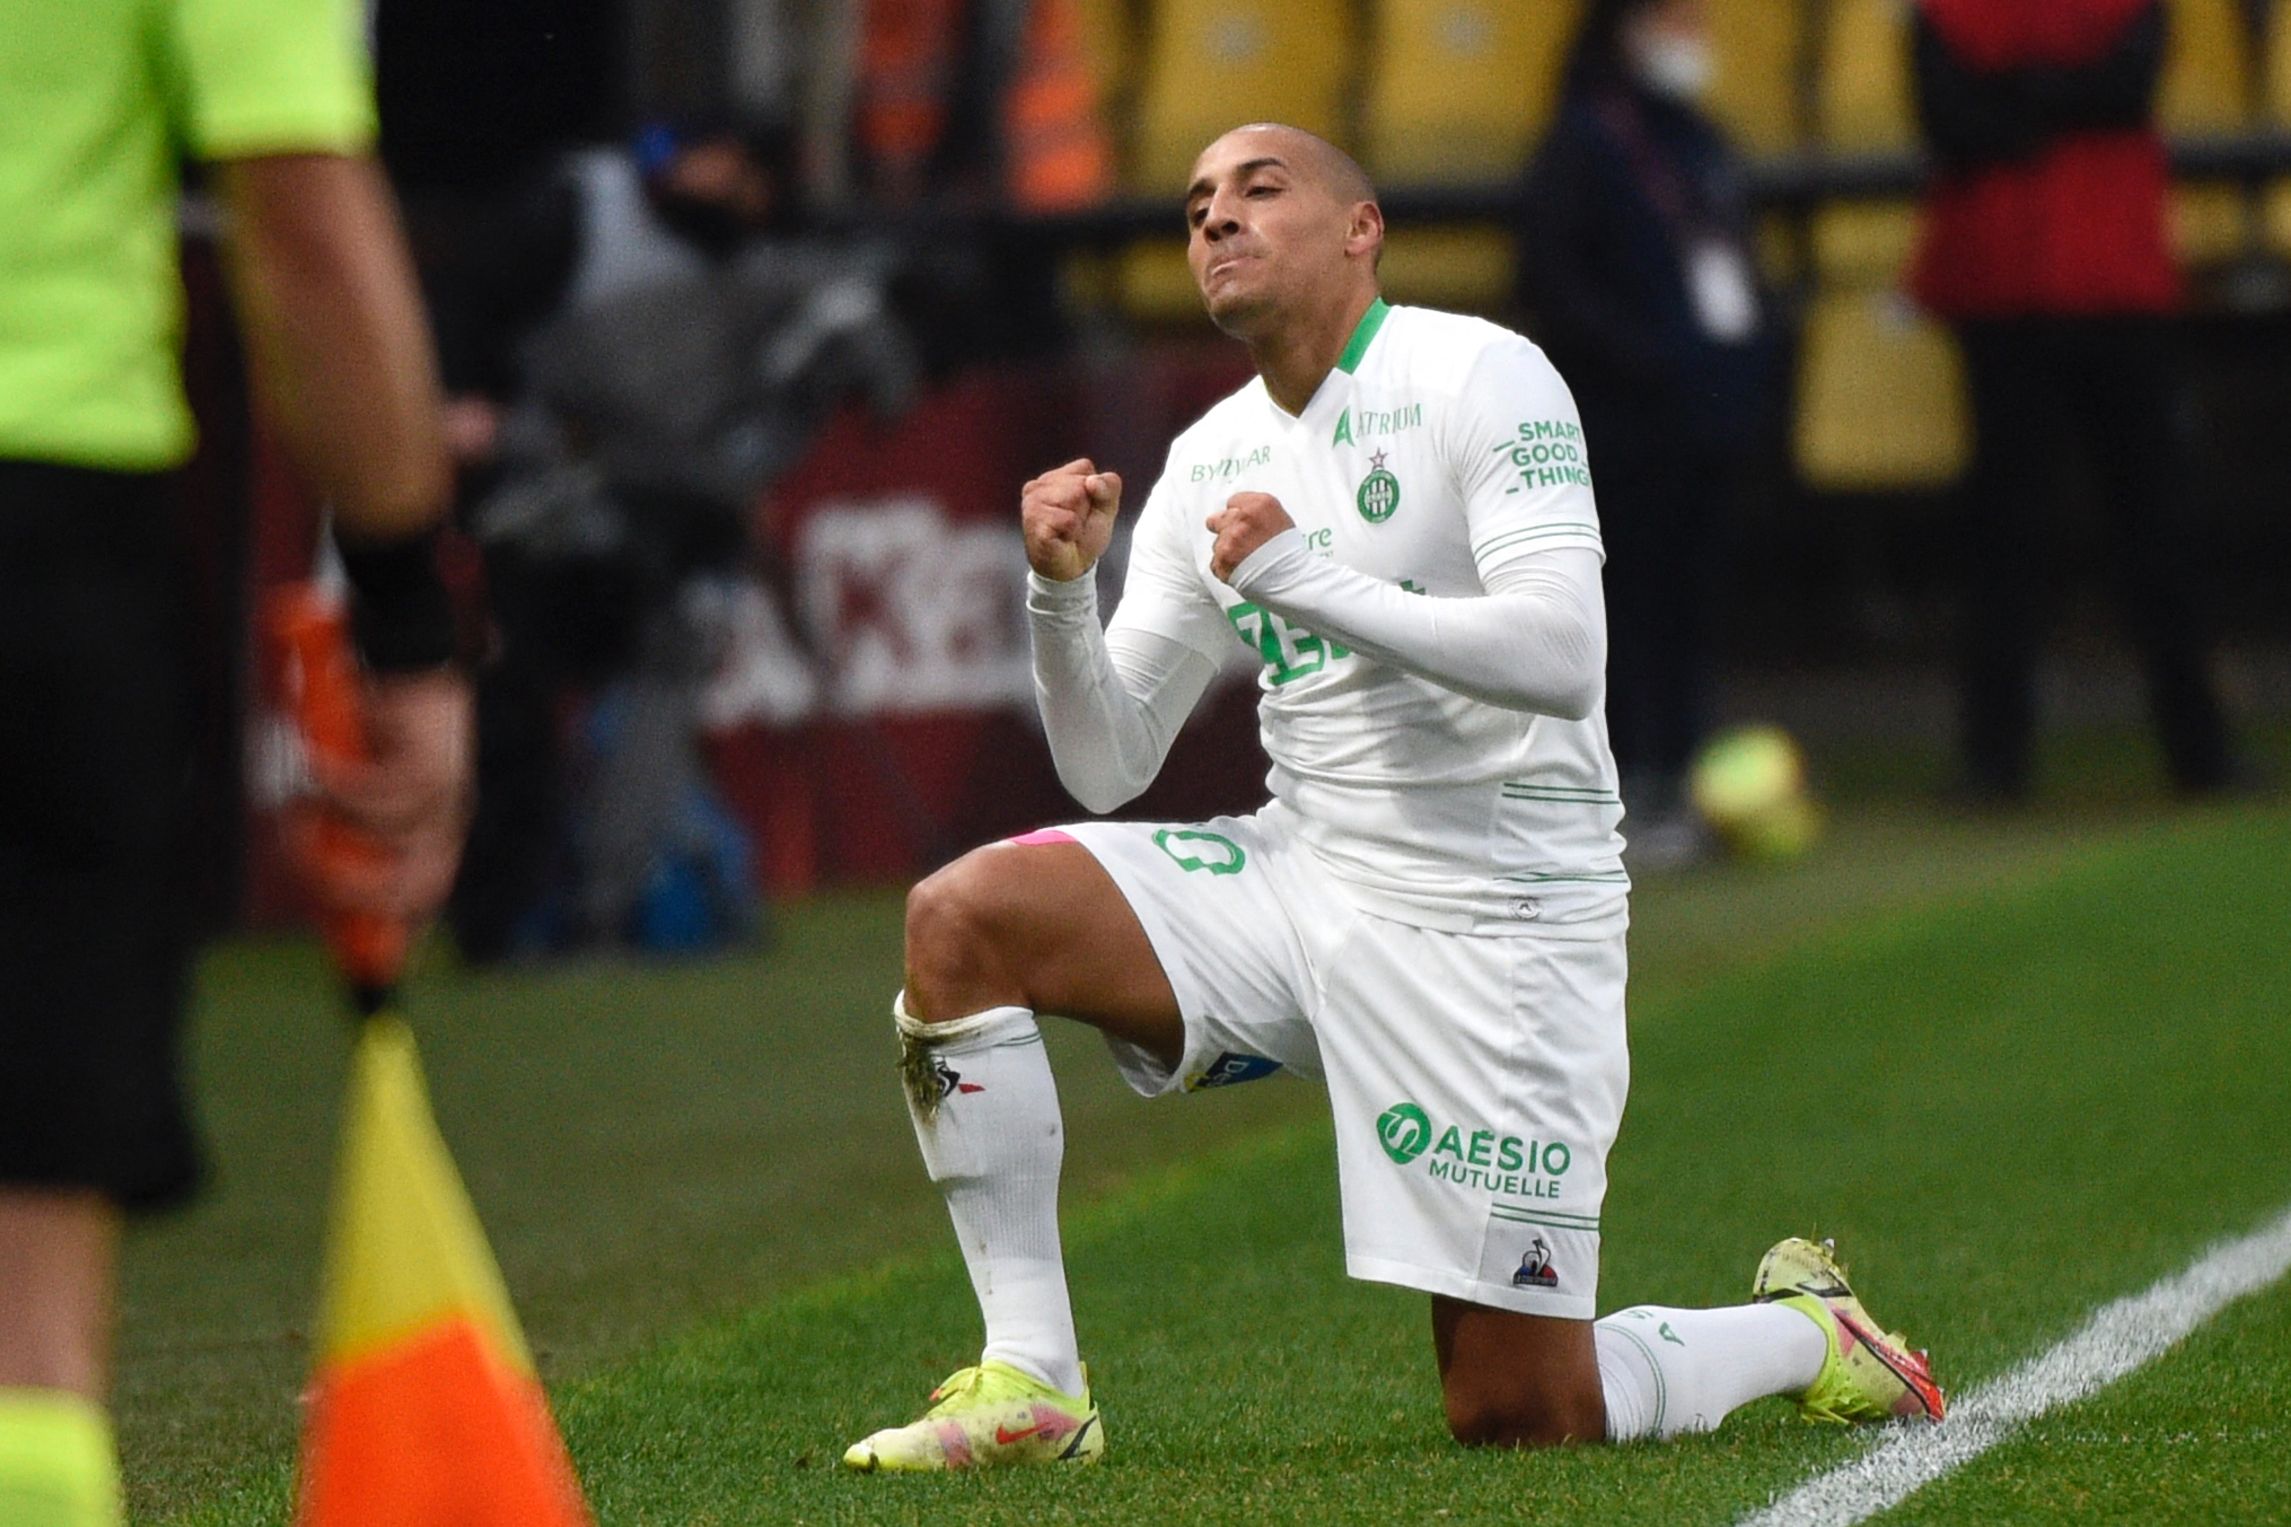 El jugador del Saint-Etienne Wahbi Khazri celebrando el gol al Metz en el Saint-Symphorien. (Foto Prensa Libre: AFP)